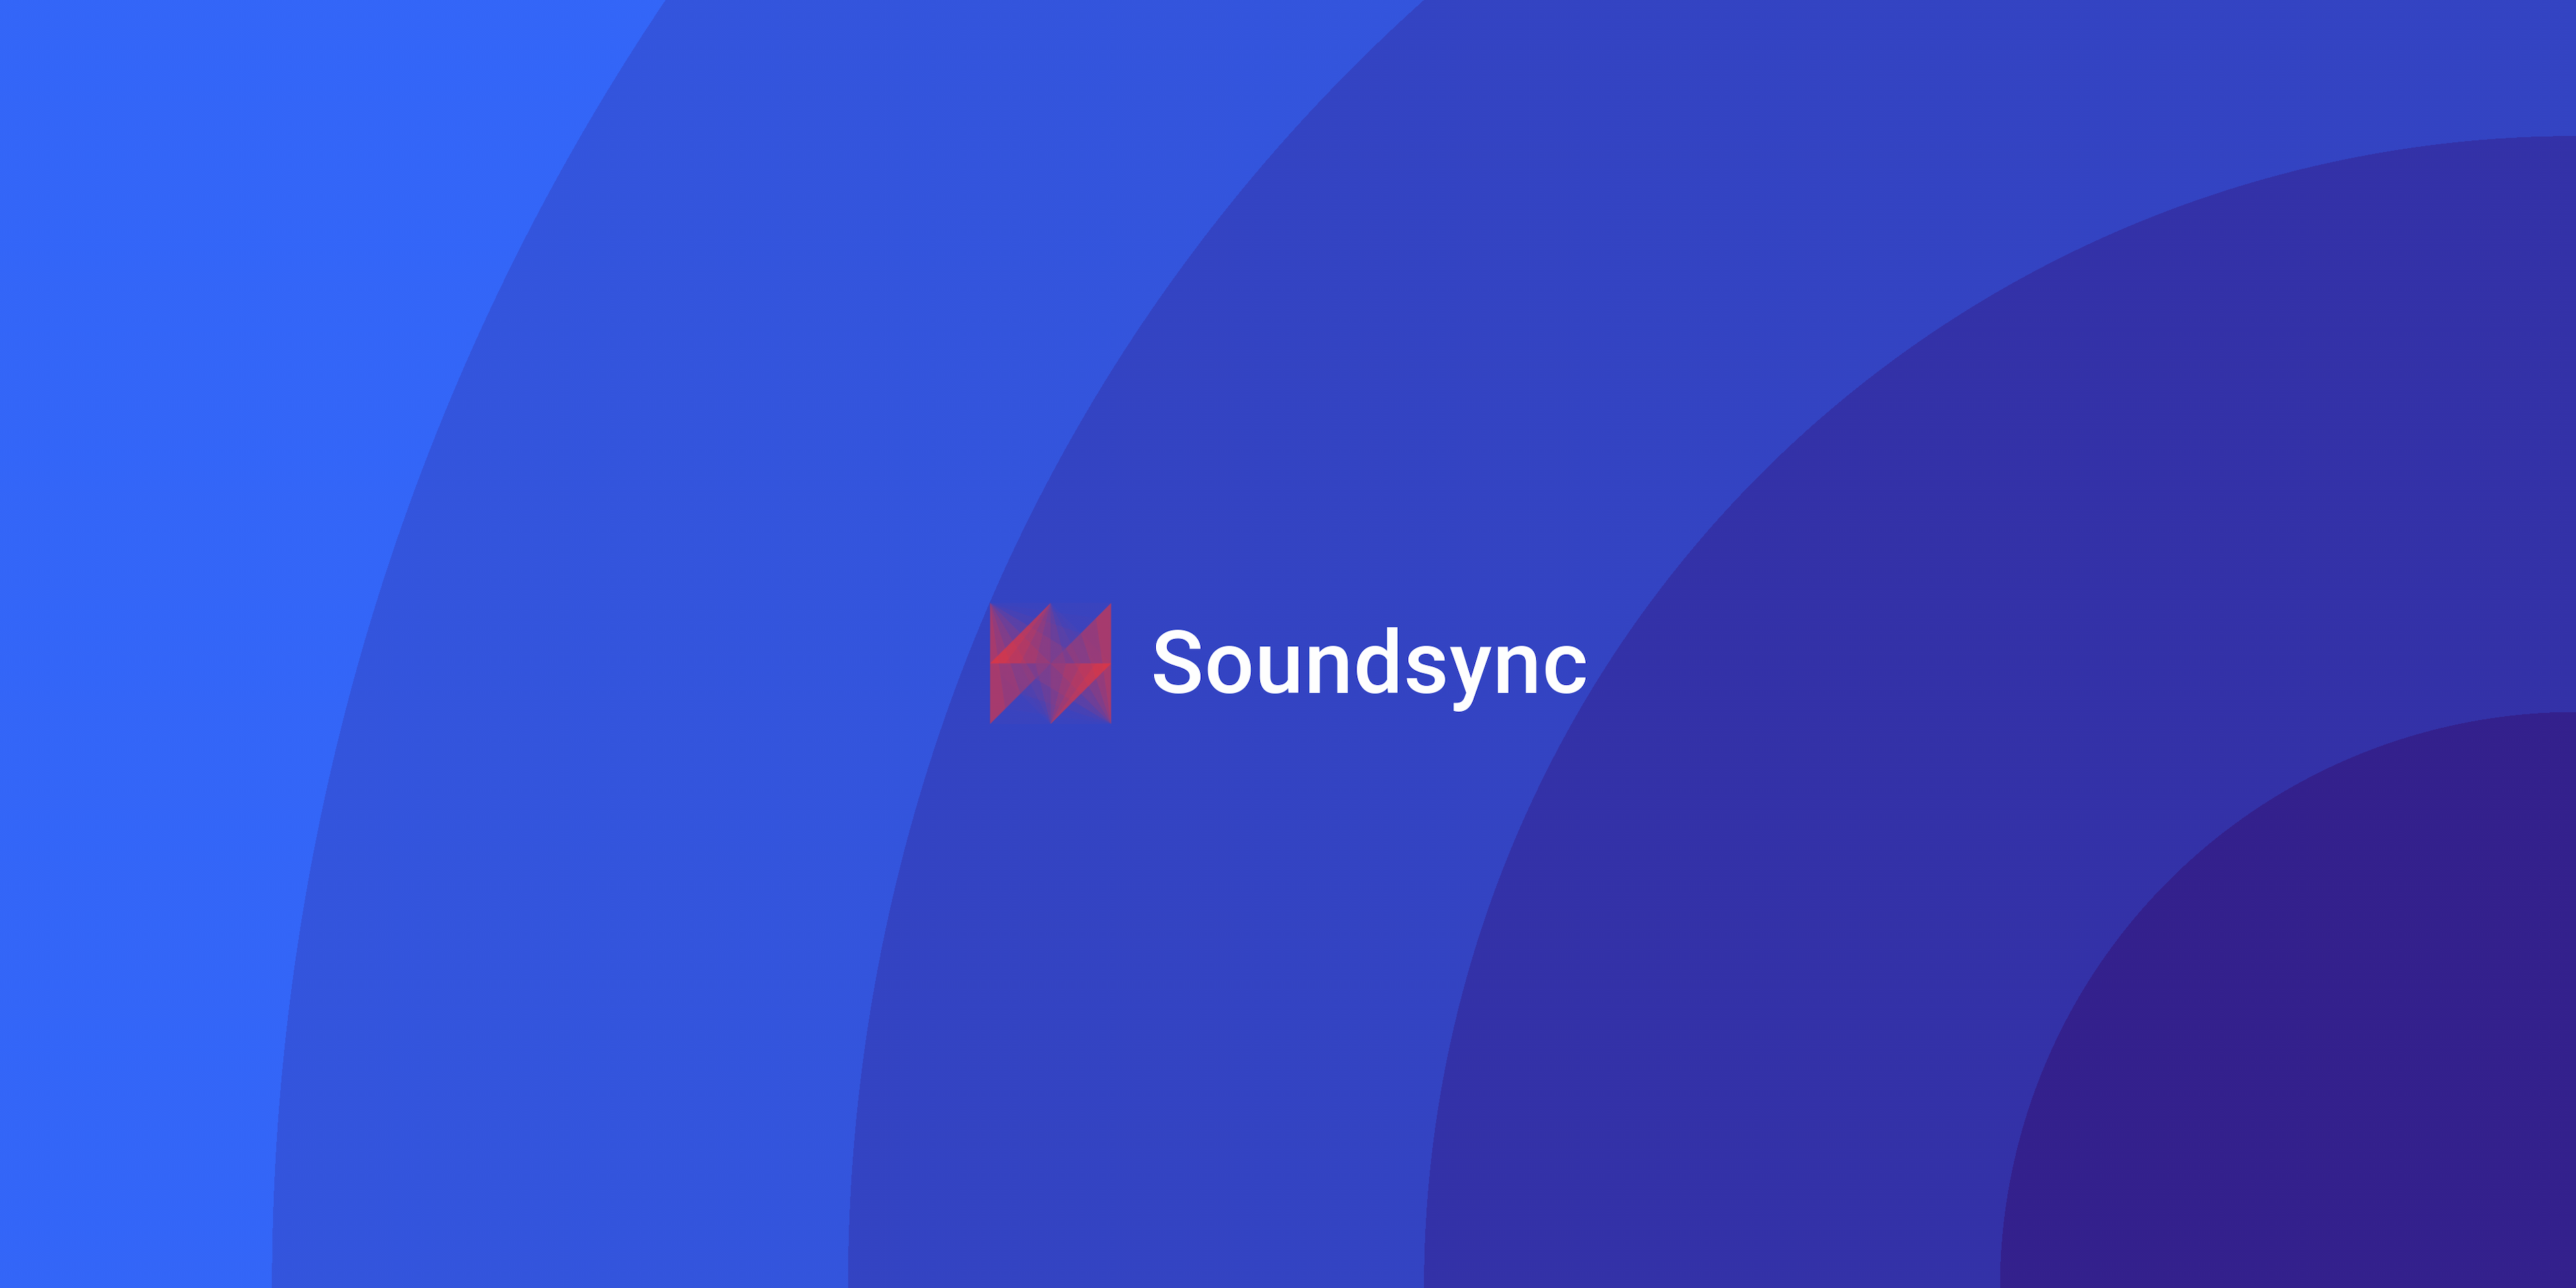 Soundsync